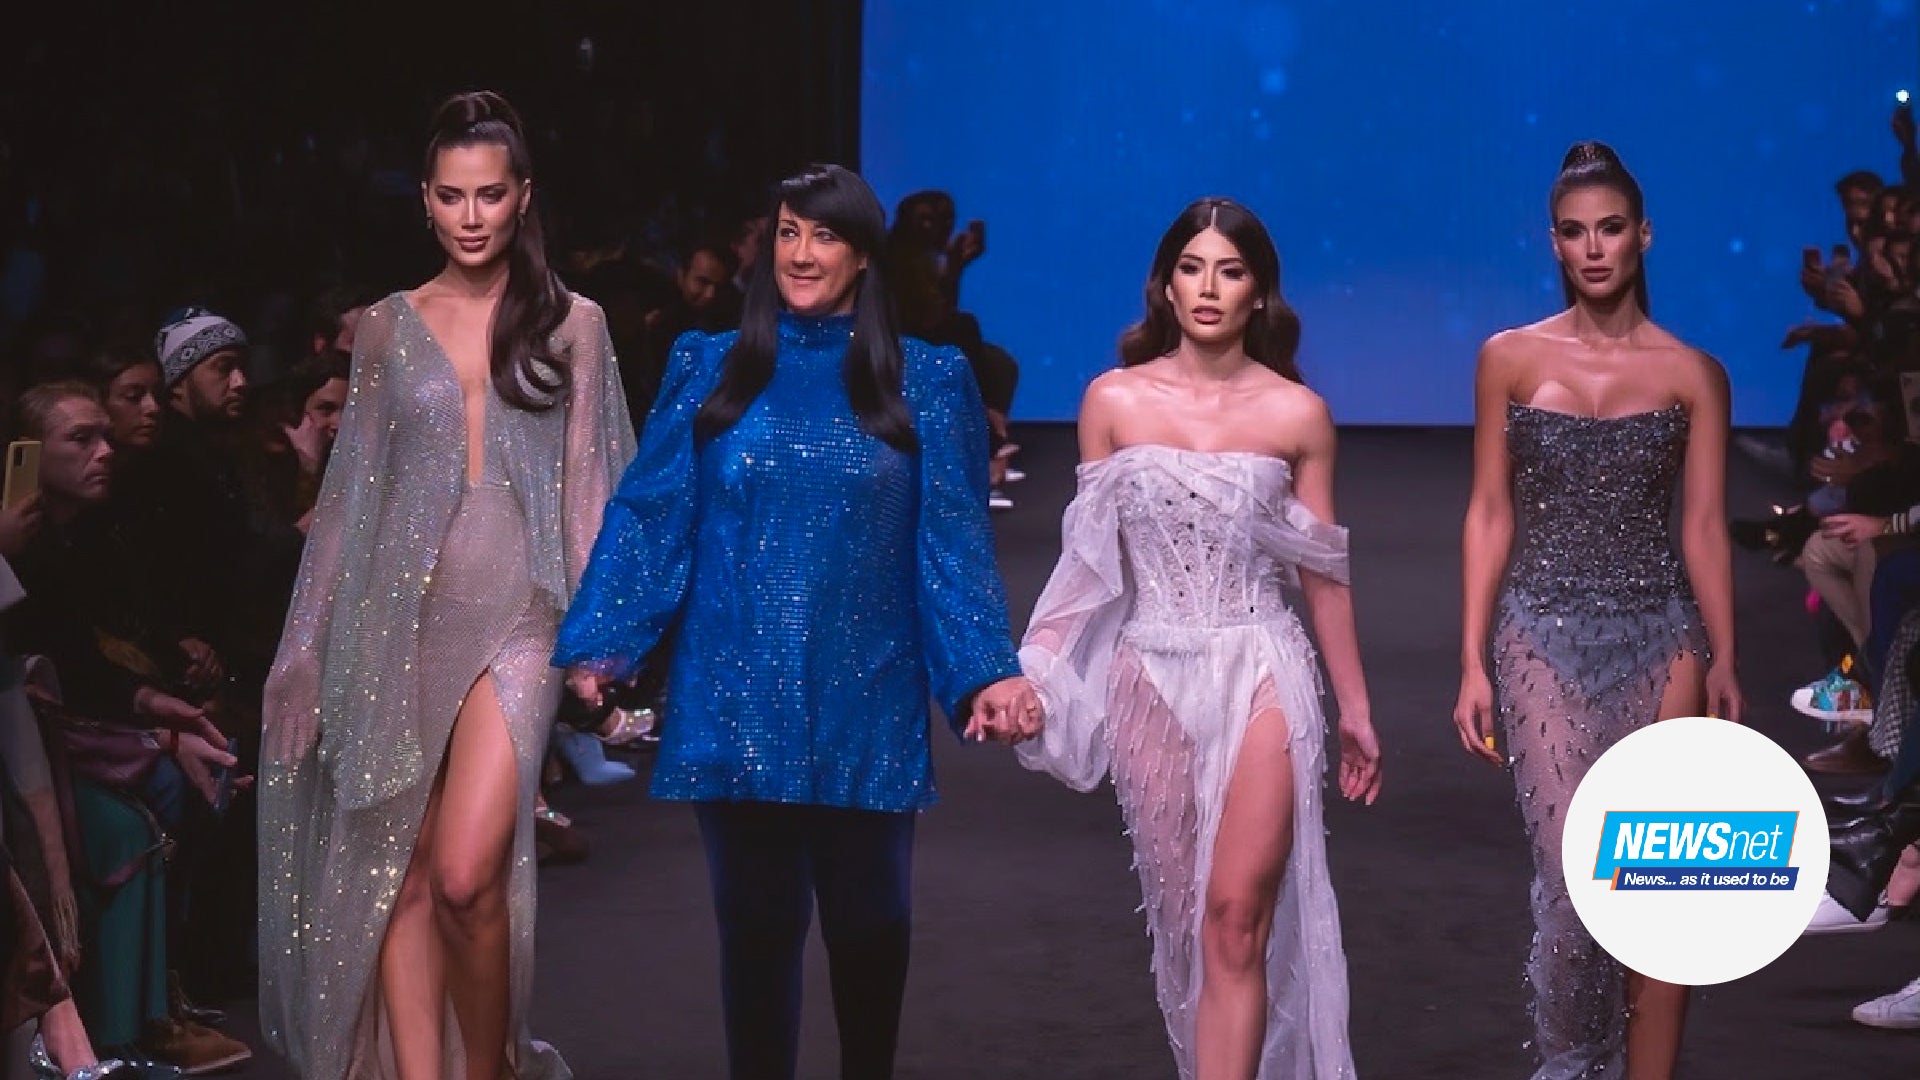 Bárbara Castellanos showcases her brand Passarellas at NY Fashion Week, alongside Giannina Azar a renowned designer.